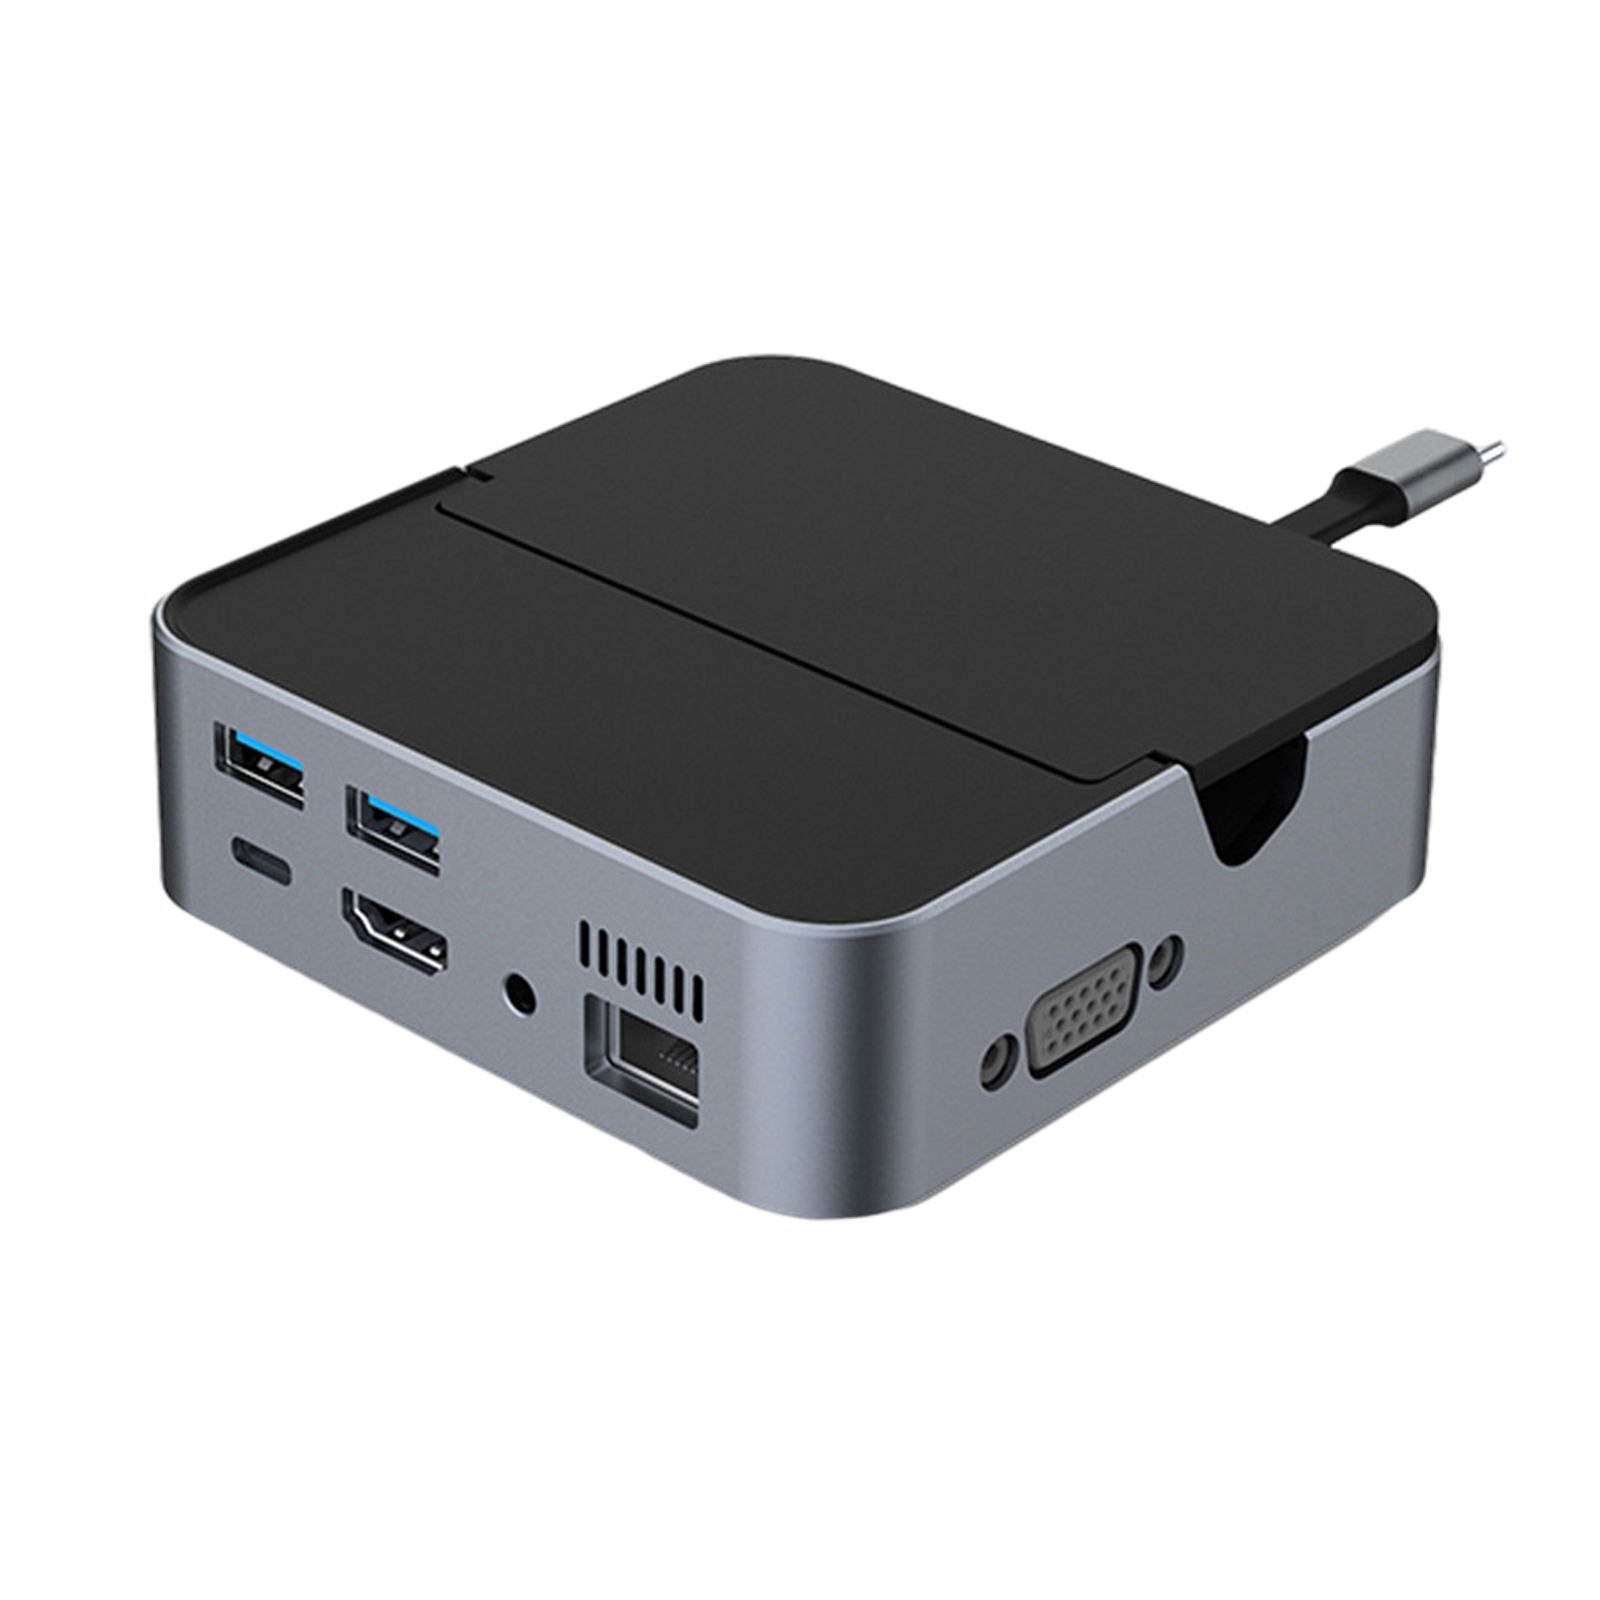 USB Type C to HDMI VGA Adapter 9 in 1 SD/TF Card Reader Hub 2 USB Ports